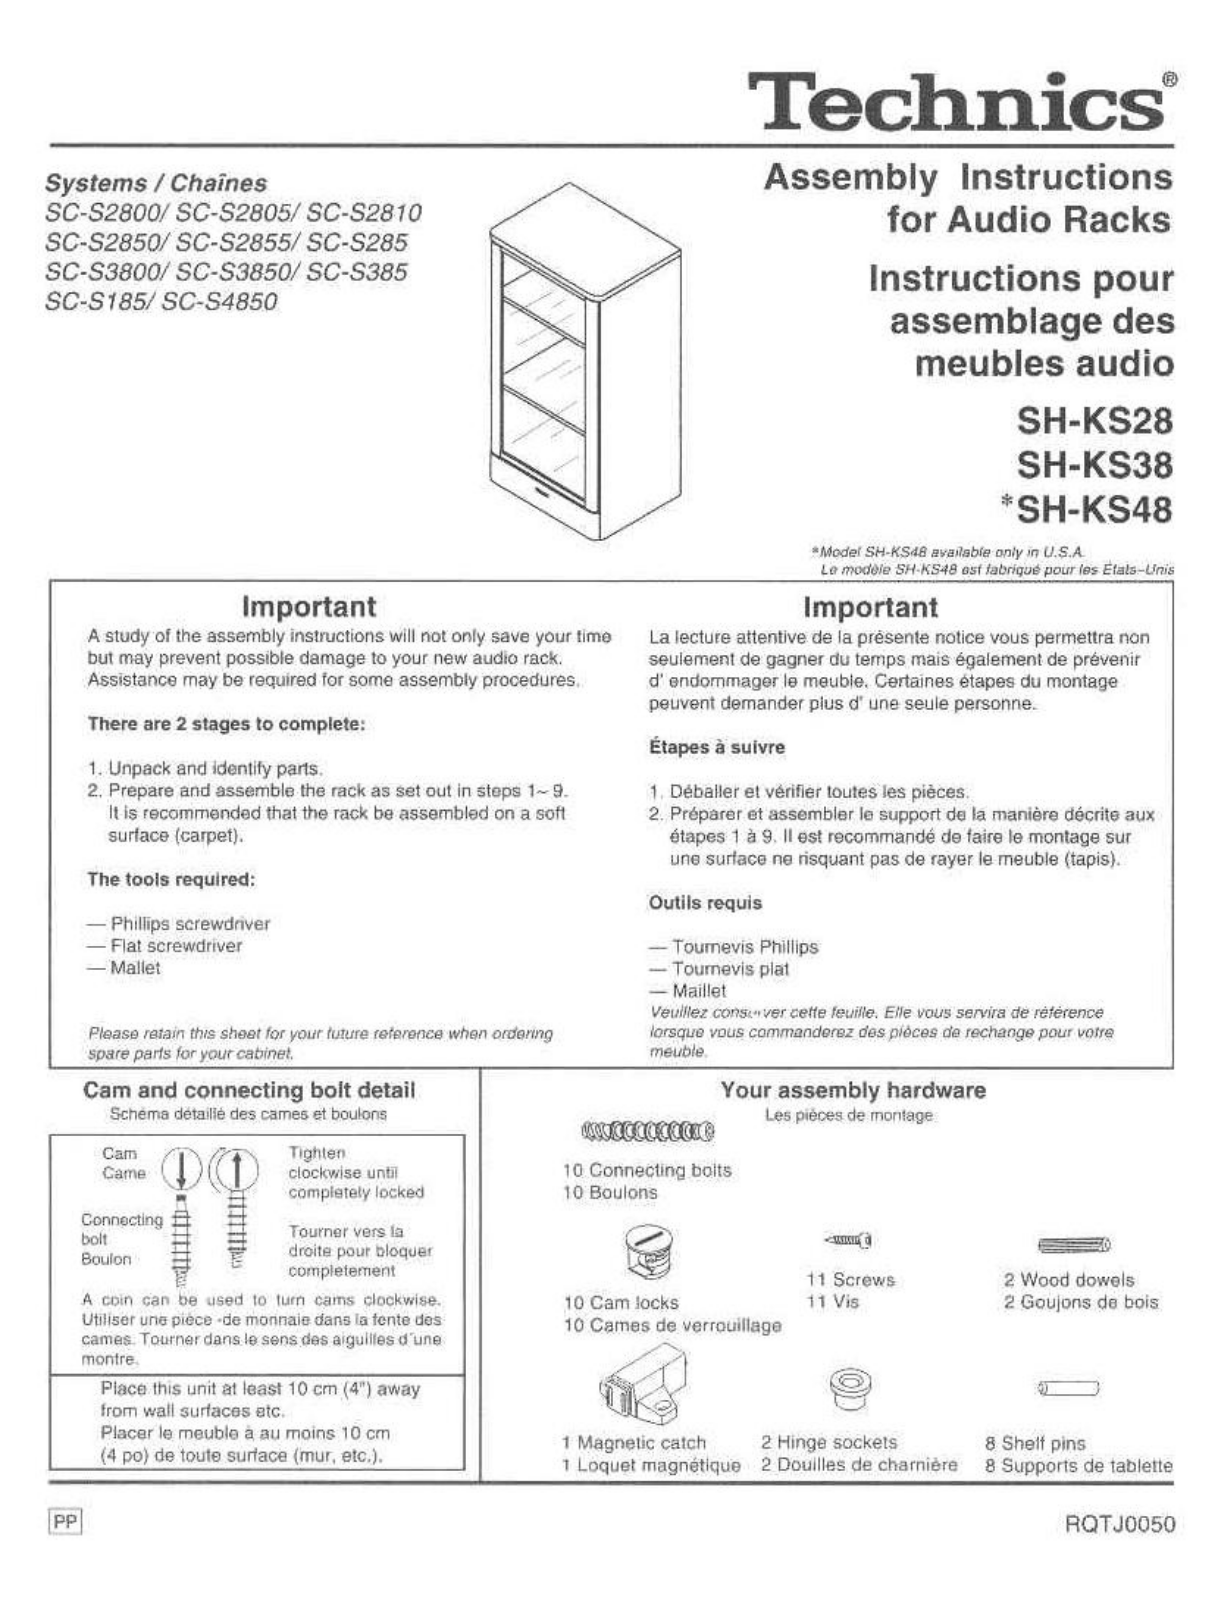 Panasonic SH-KS48, SH-KS38, SH-KS28 User Manual